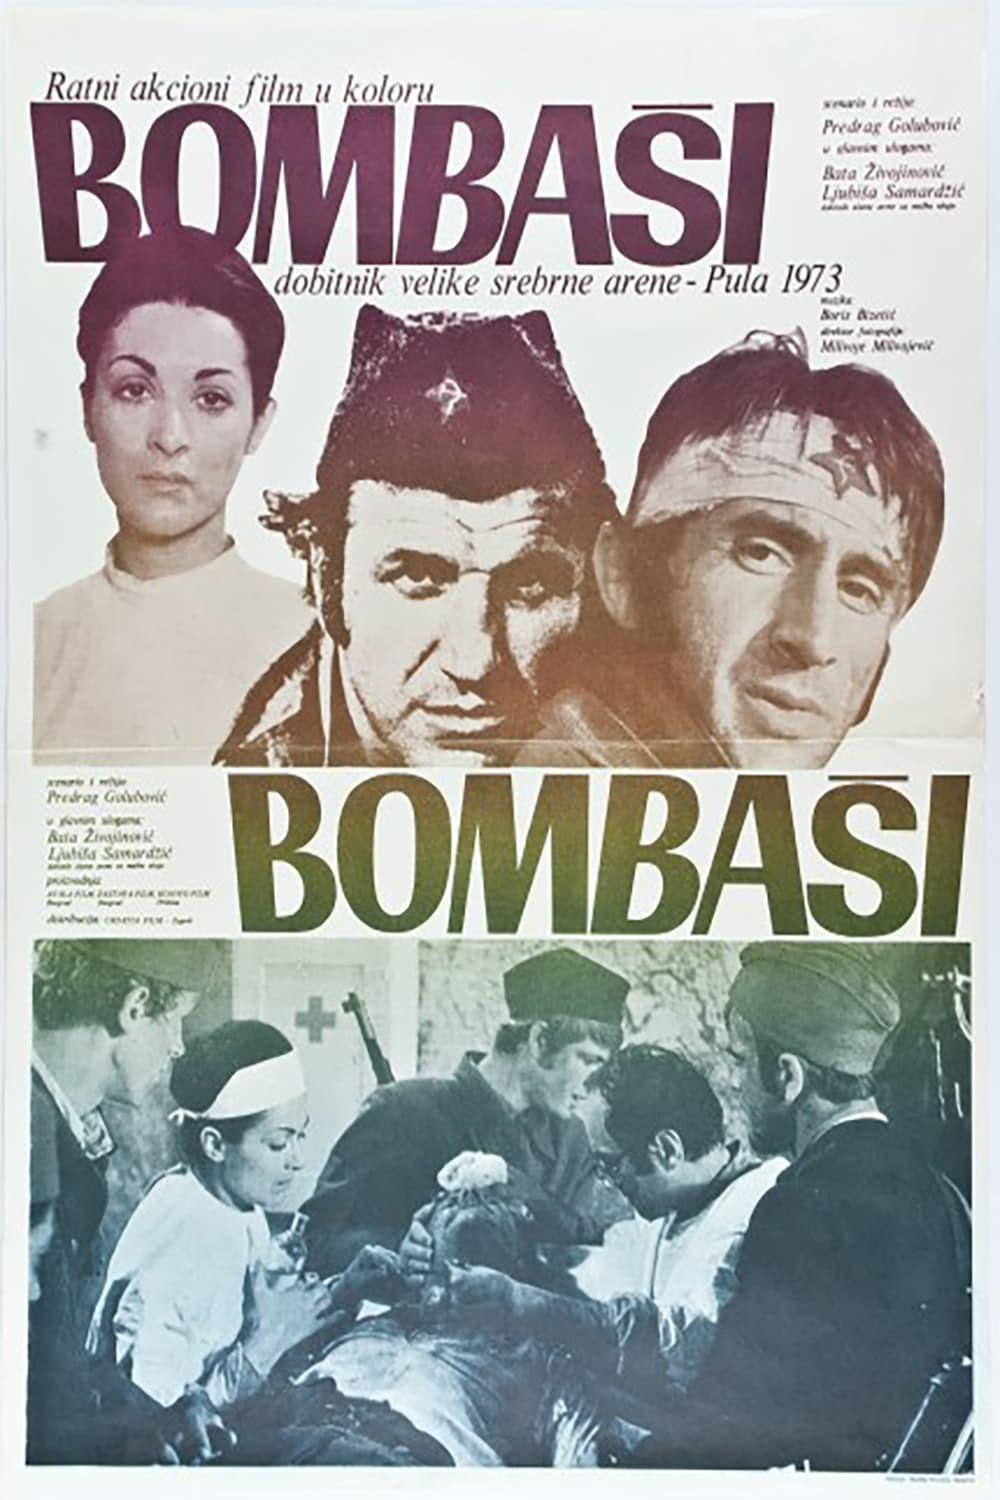 Bombaši poster